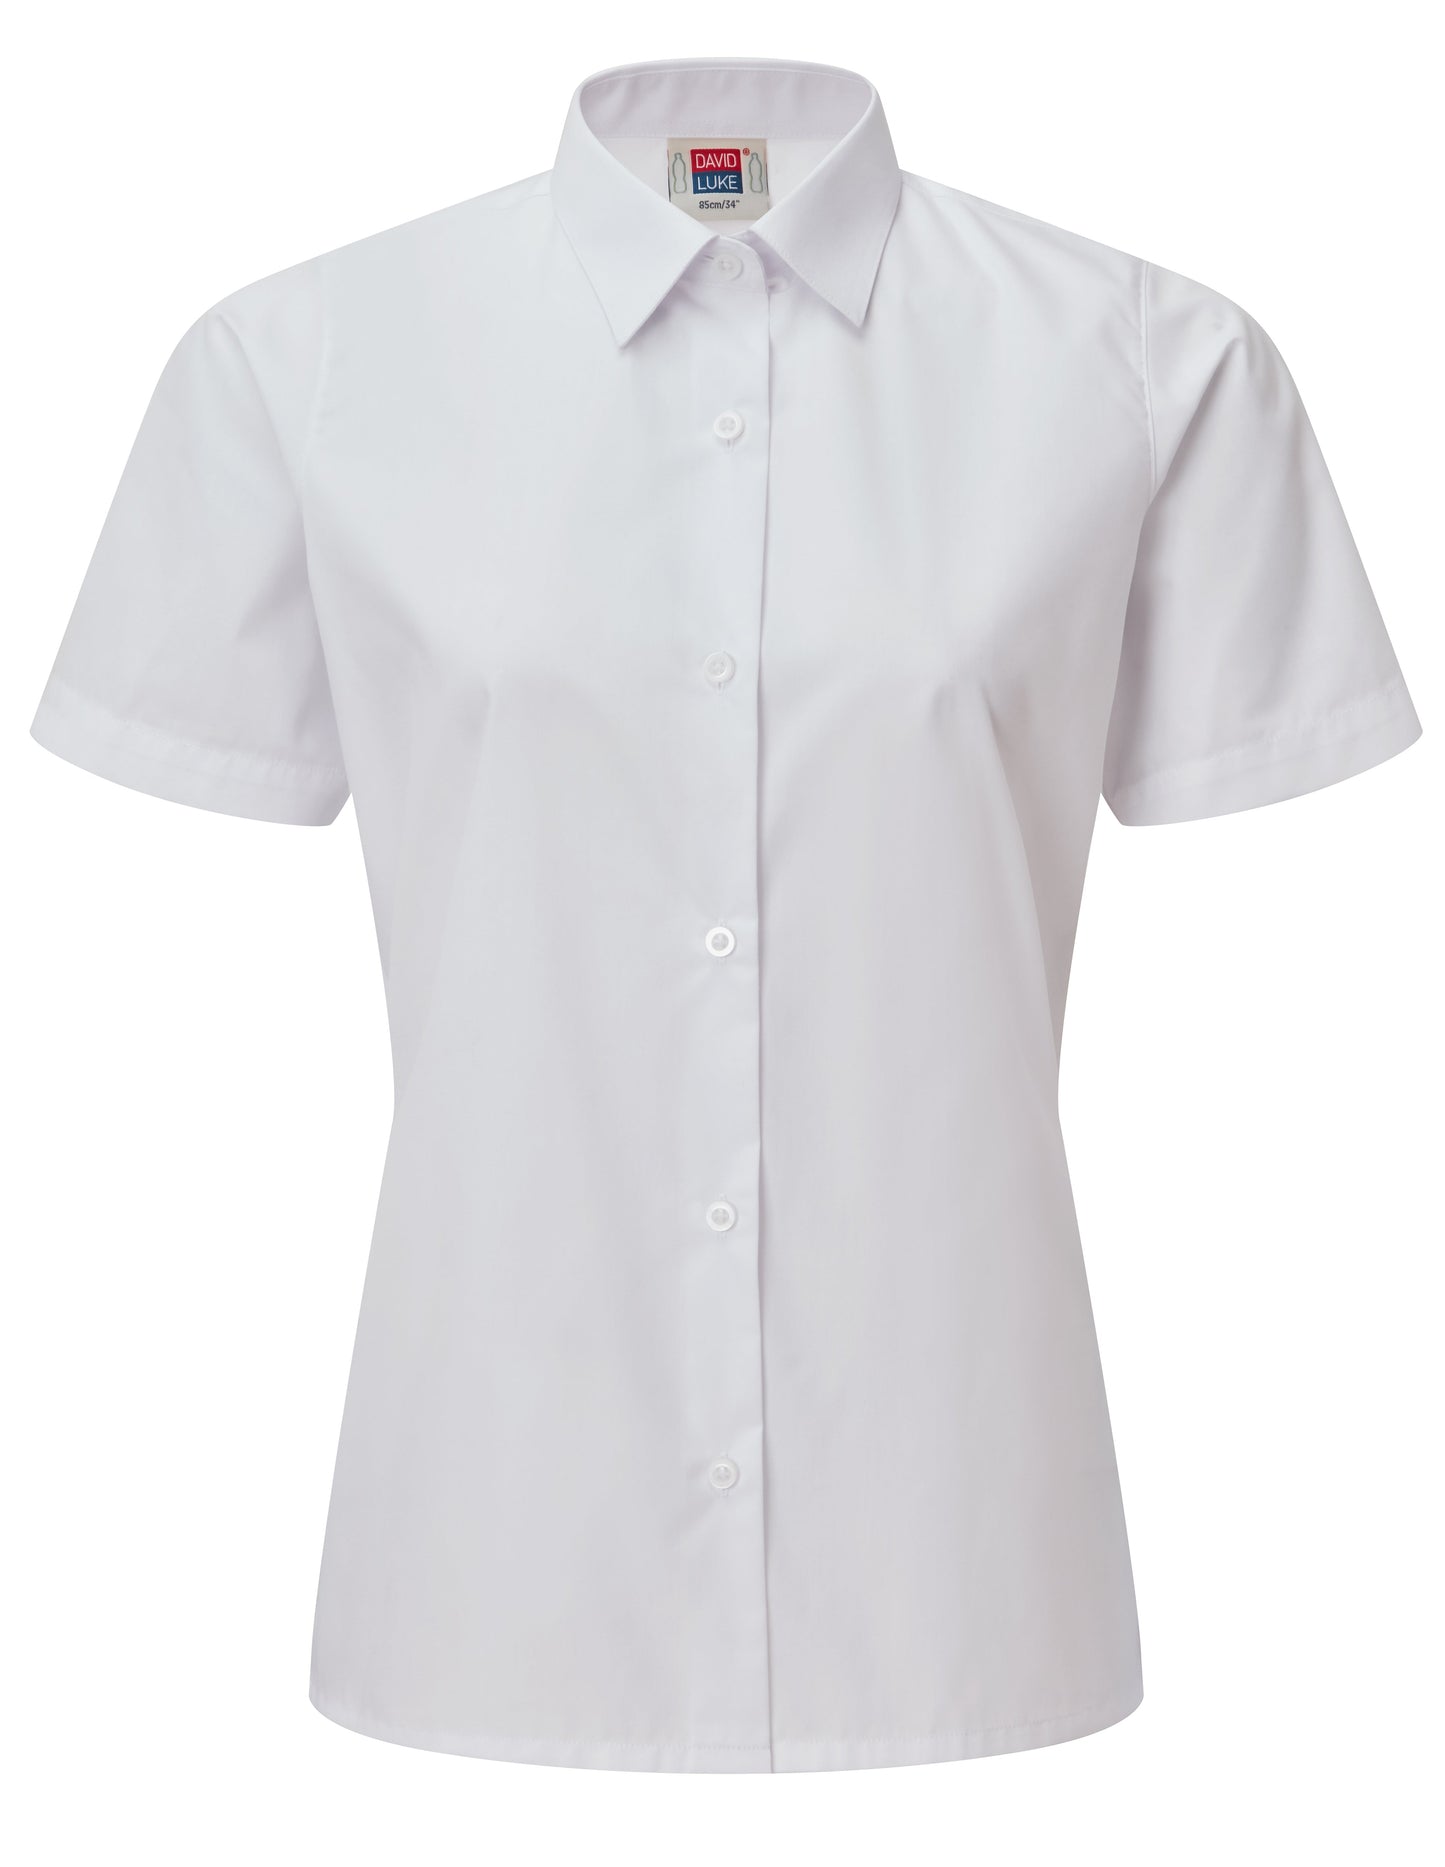 White - Girls' Short Sleeve Blouse (Twin Pack)